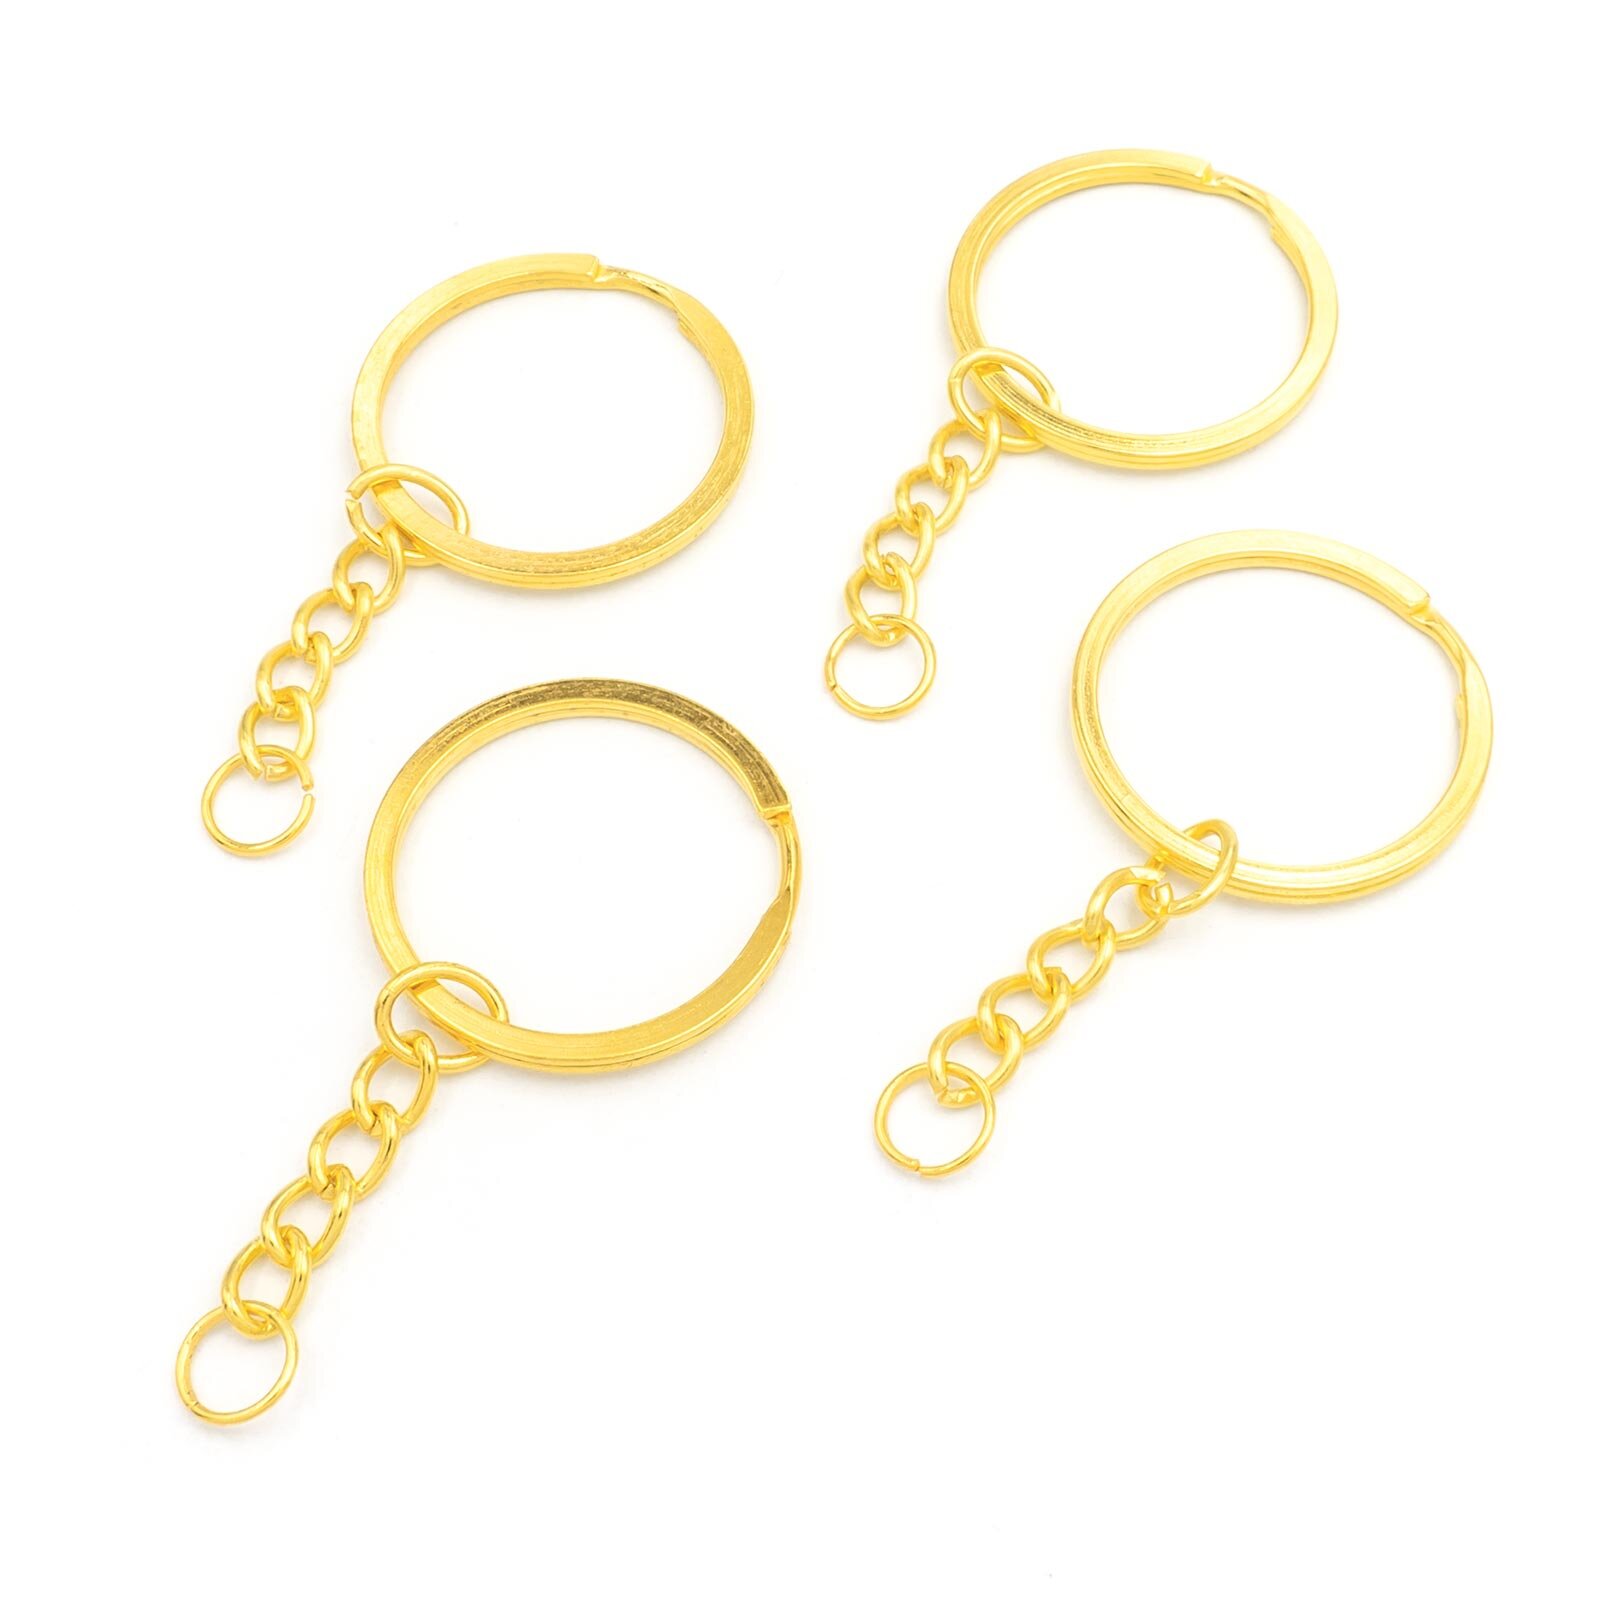 Key Chain Rings 10er-set Messing Schlüsselring Rundring Durchmesser 30mm 